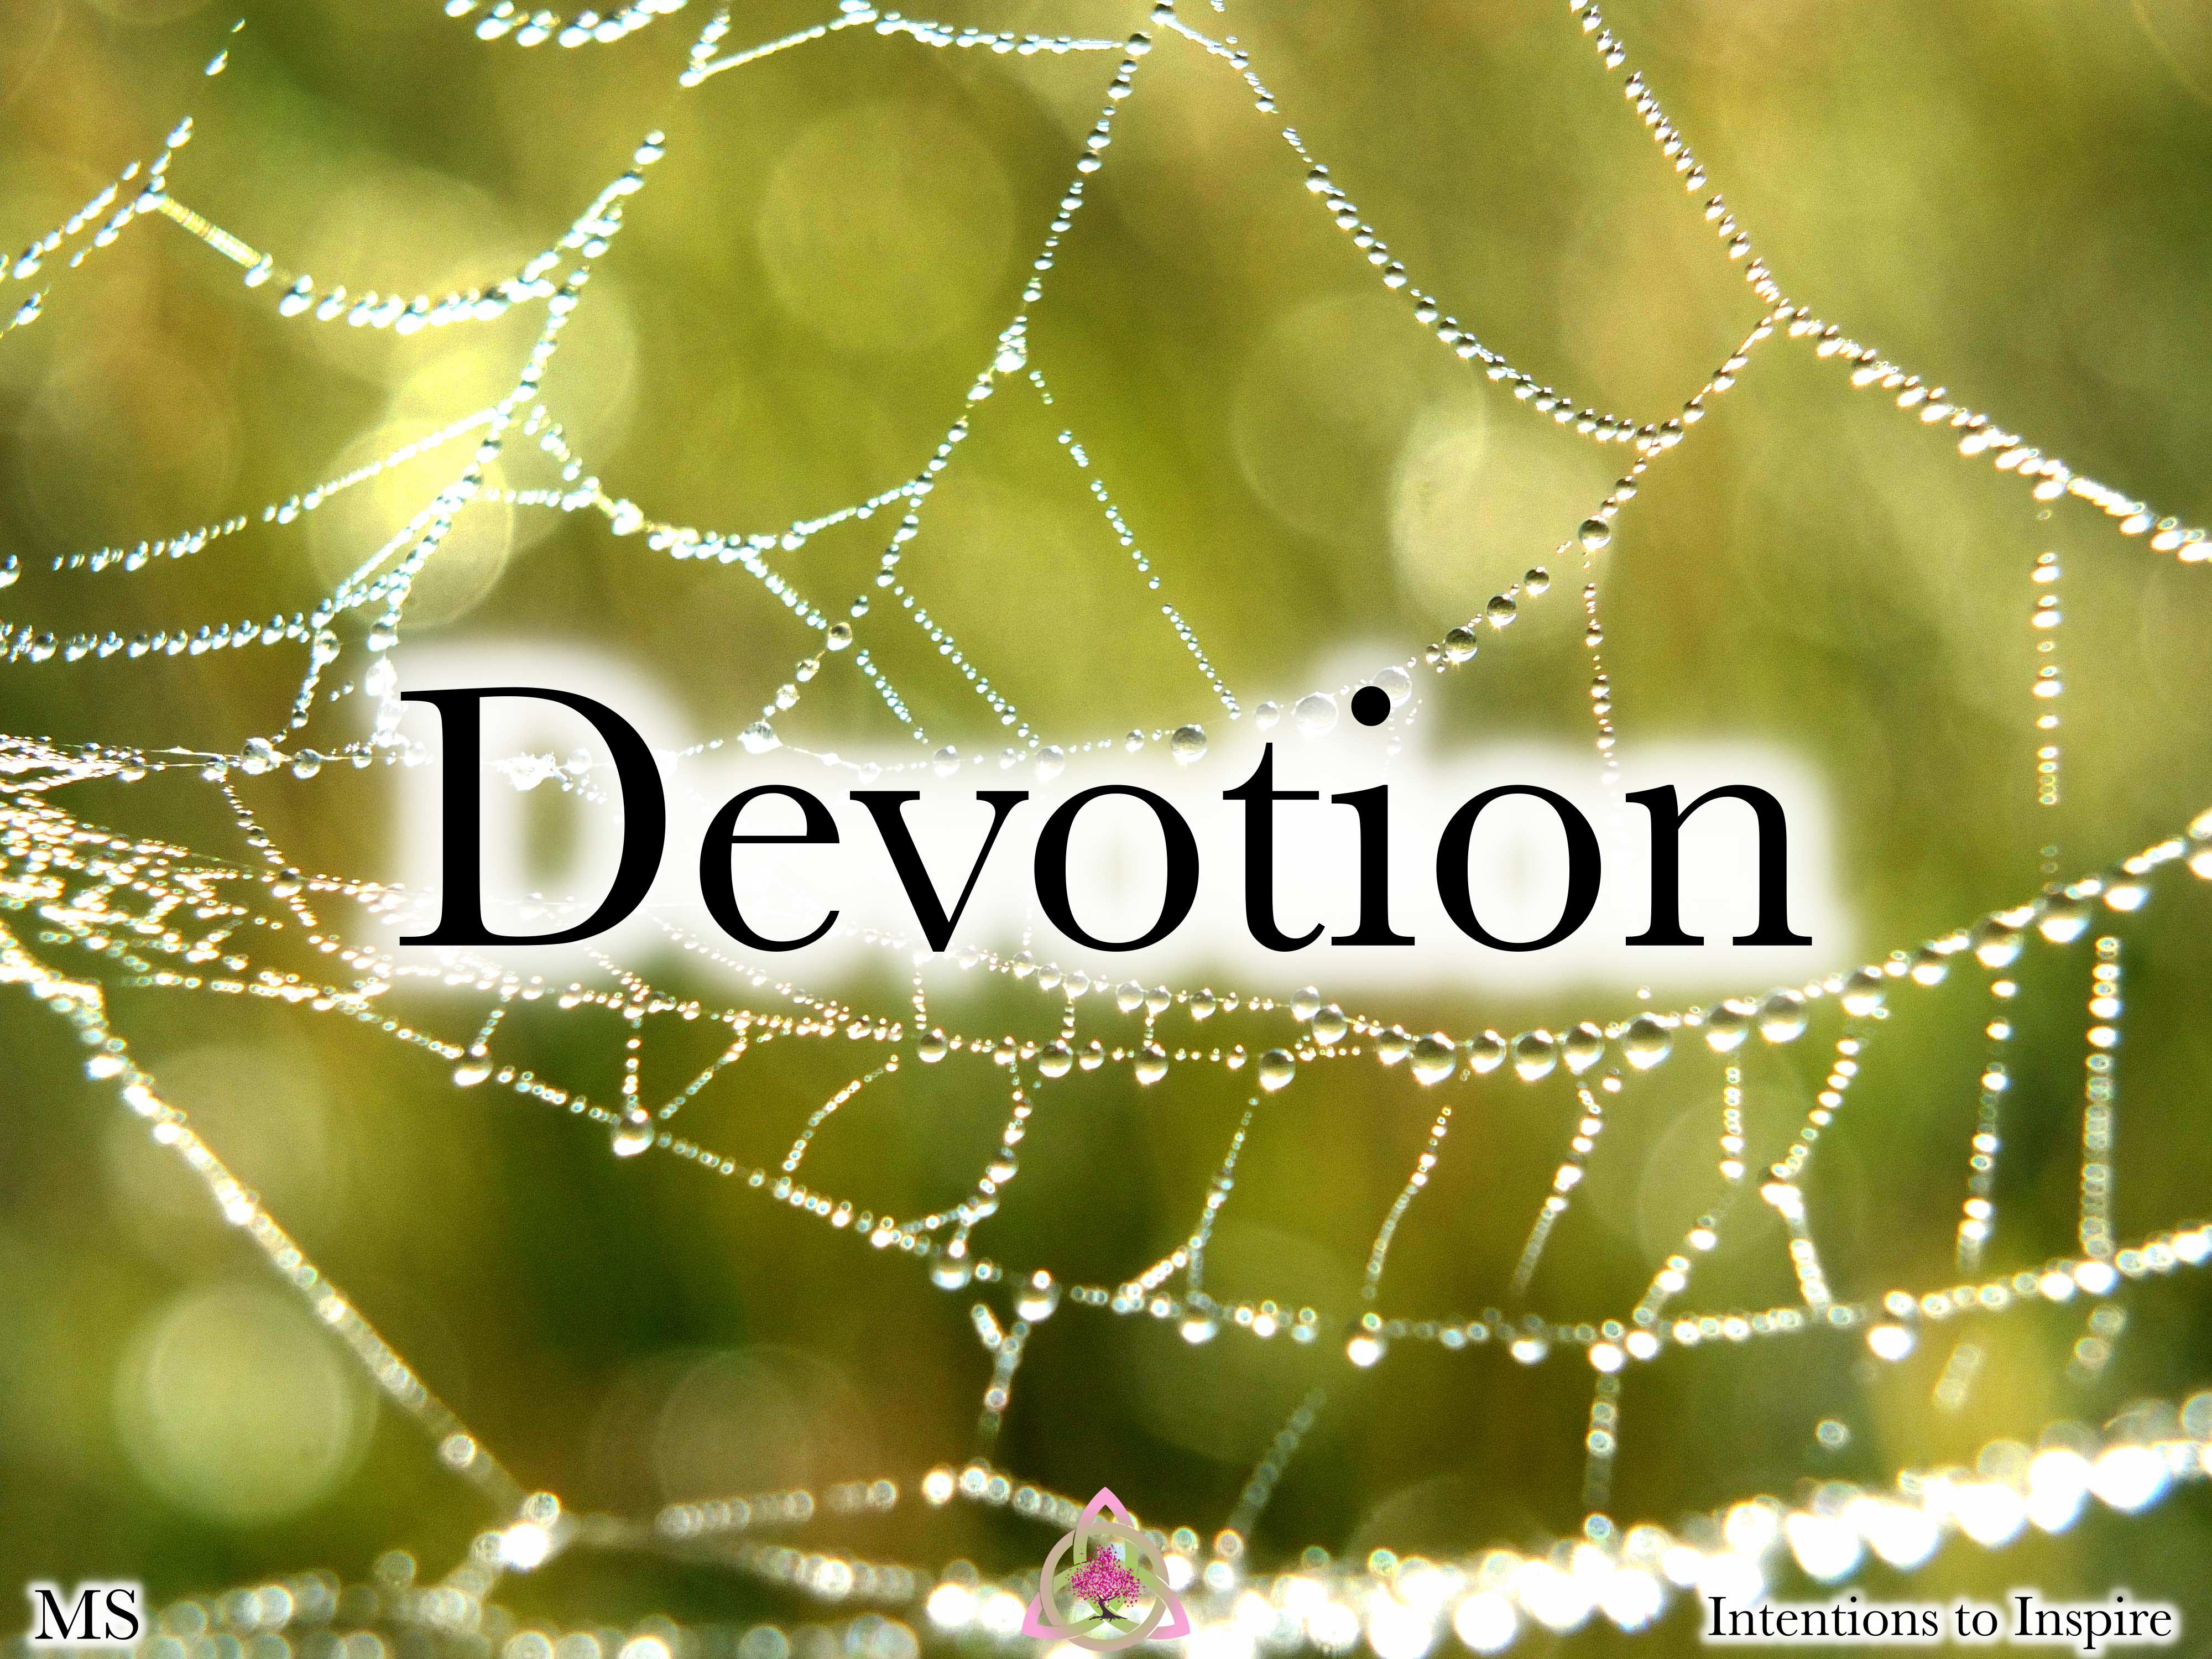 334-48-5-Devotion-MS 2